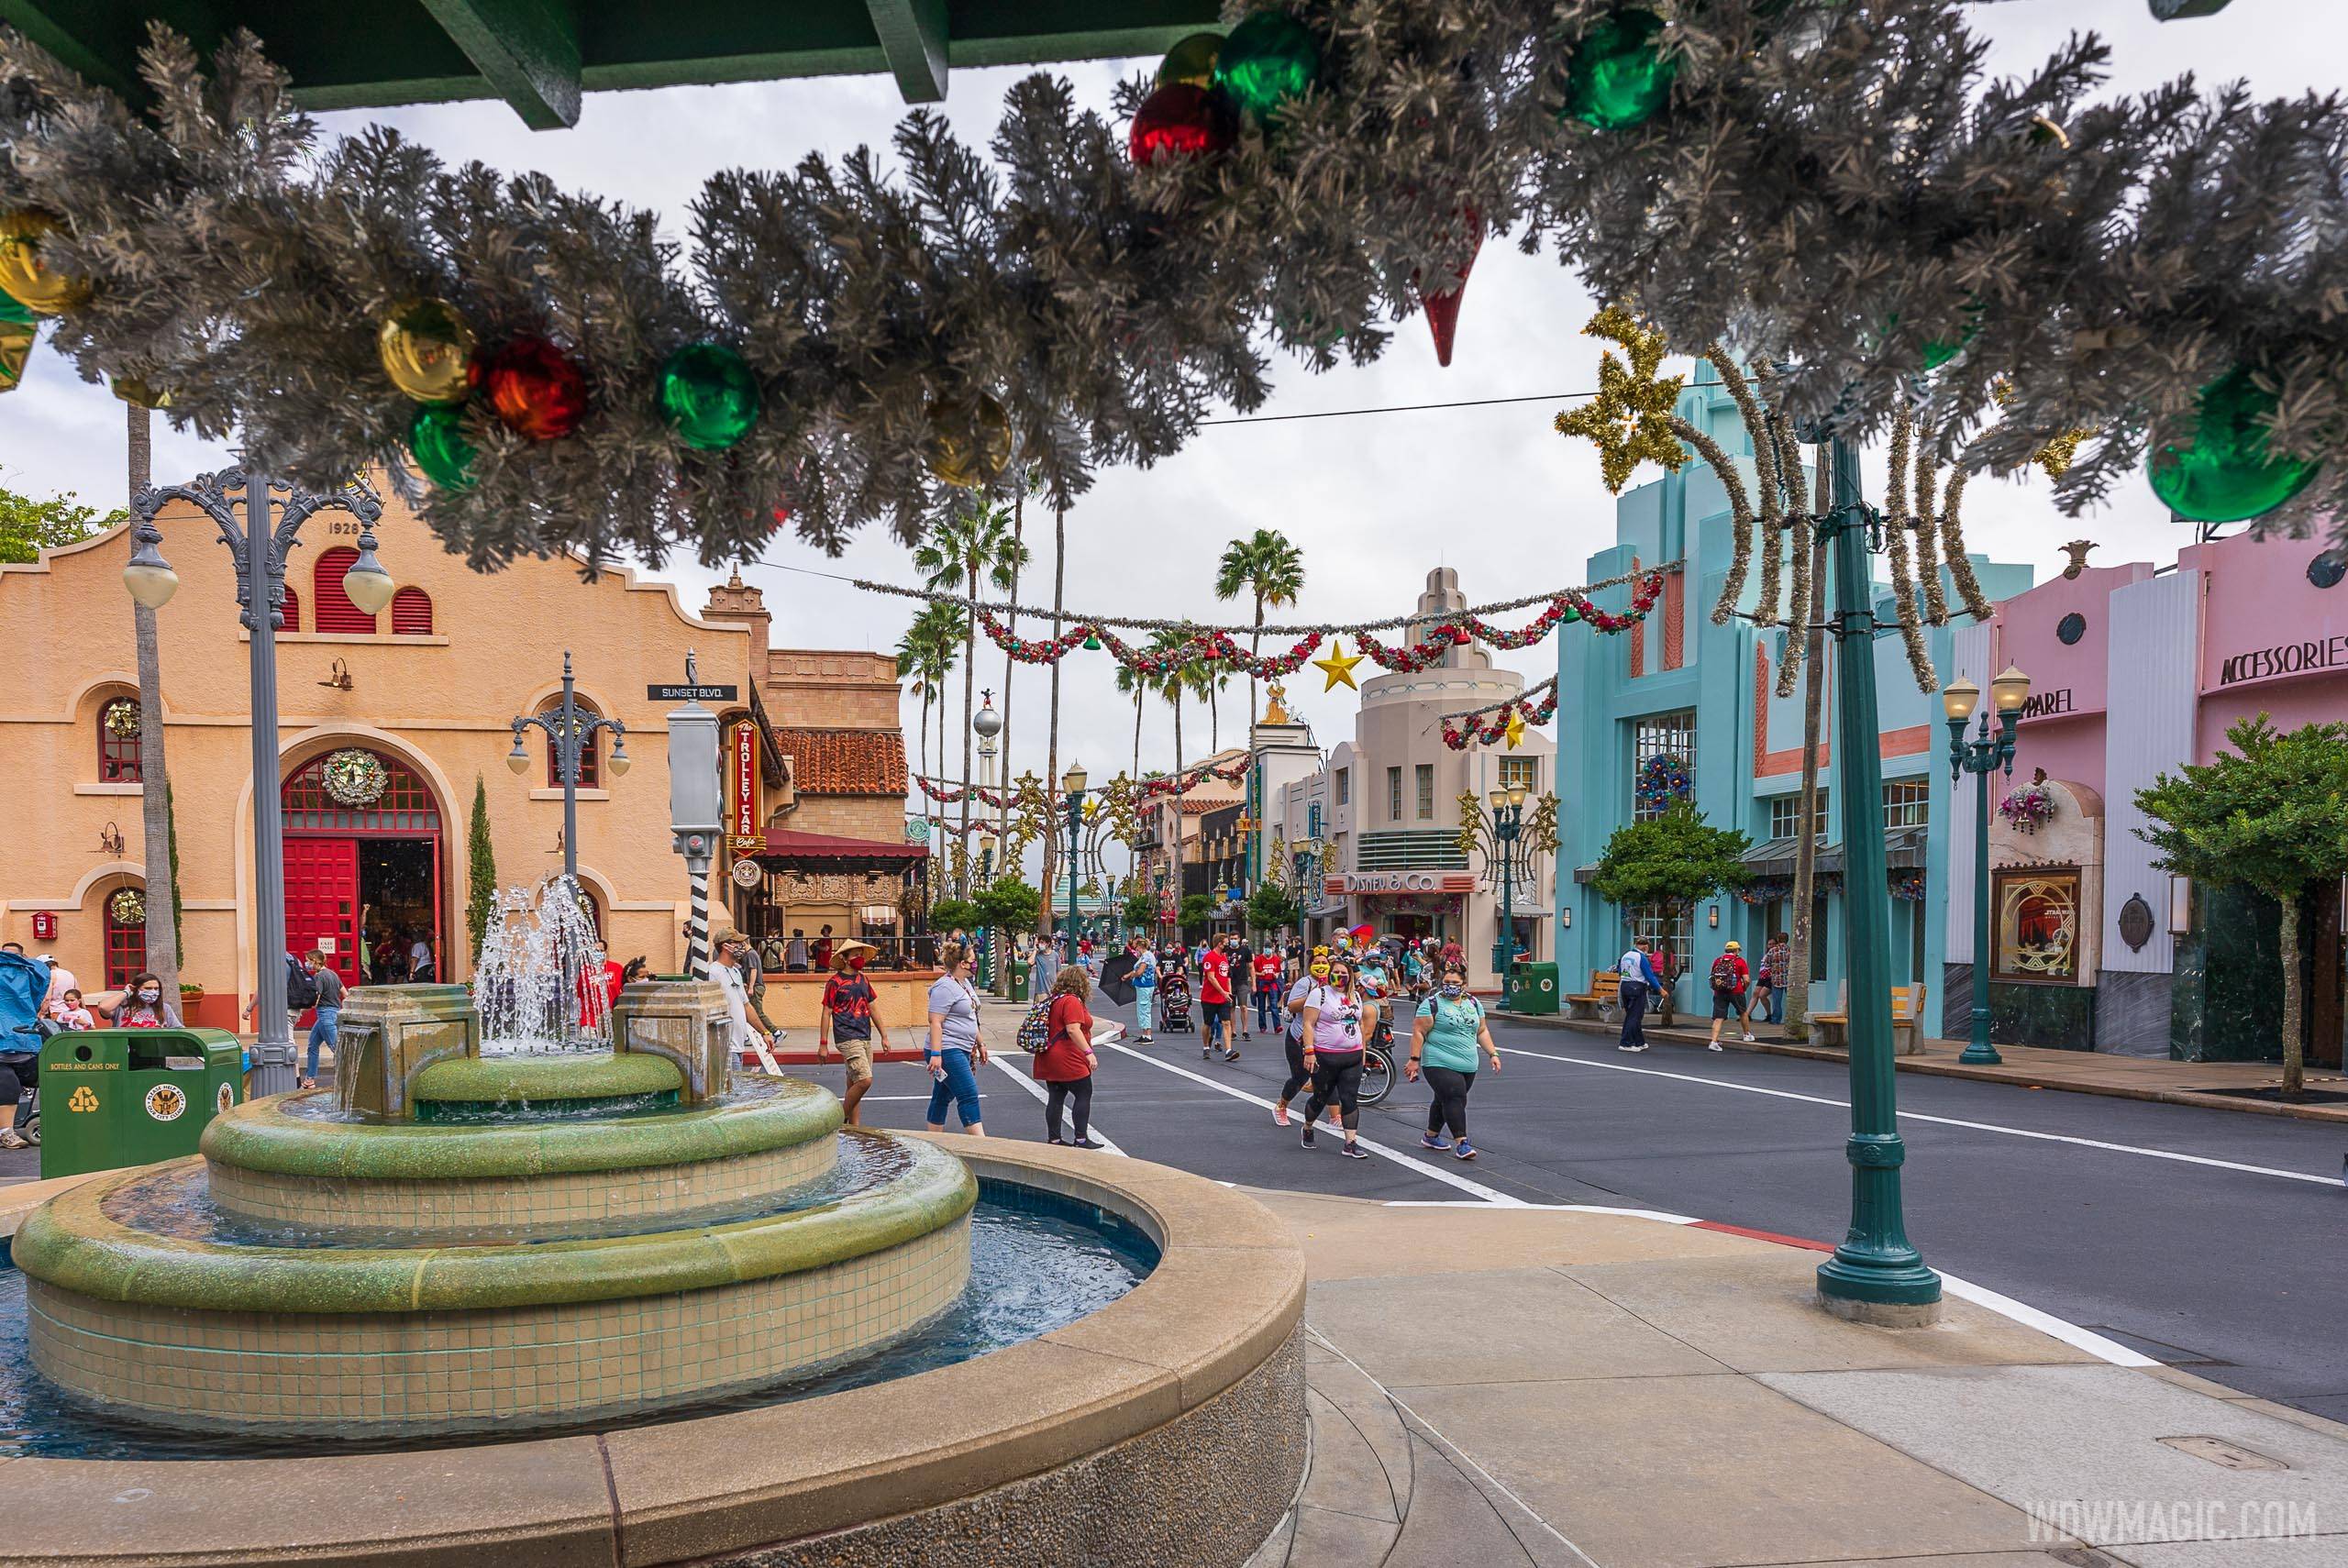 2020 Holiday Decorations at Disney's Hollywood Studios